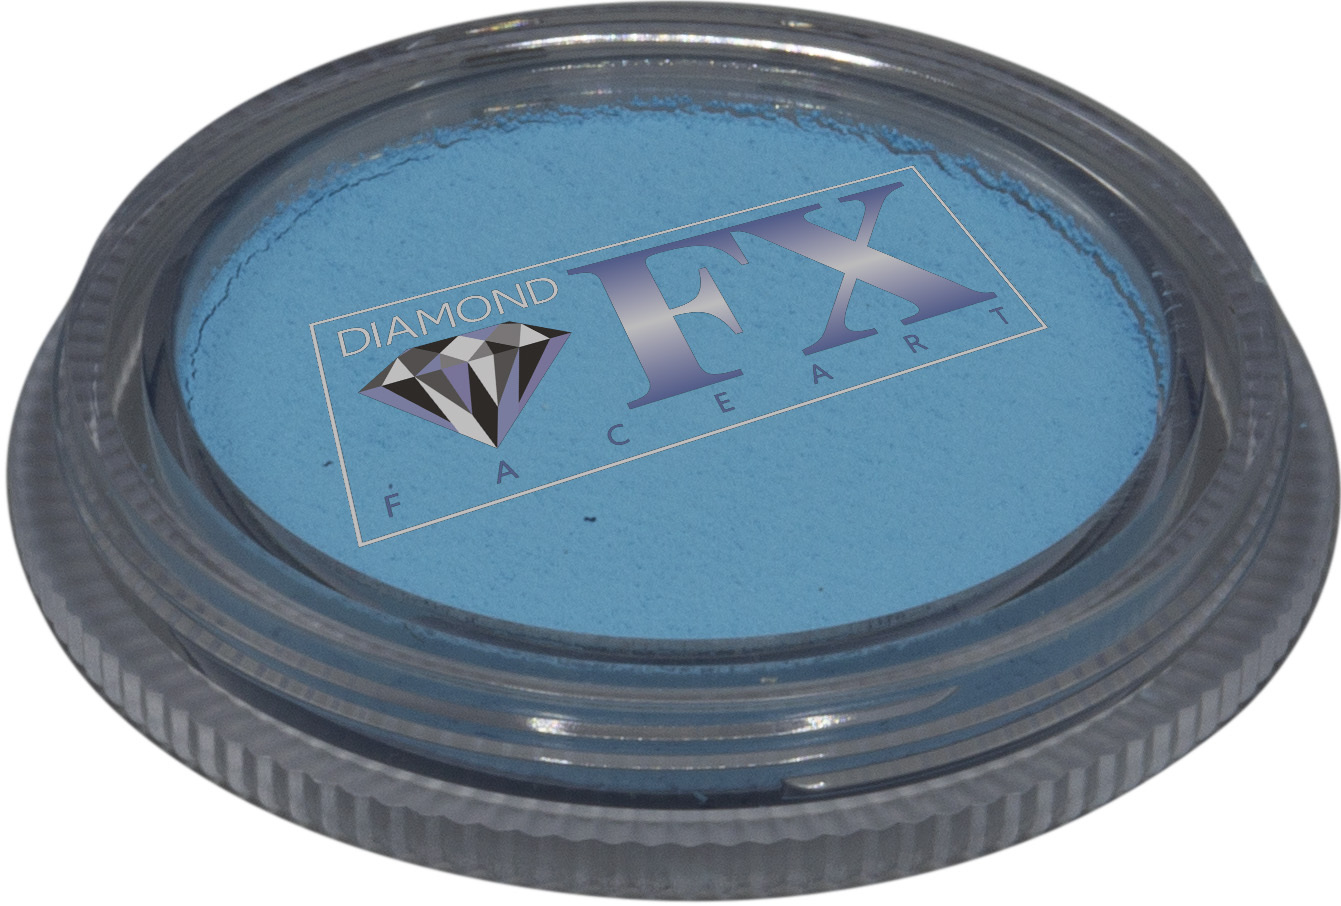 Diamond FX Light Blue 30g - Small Image